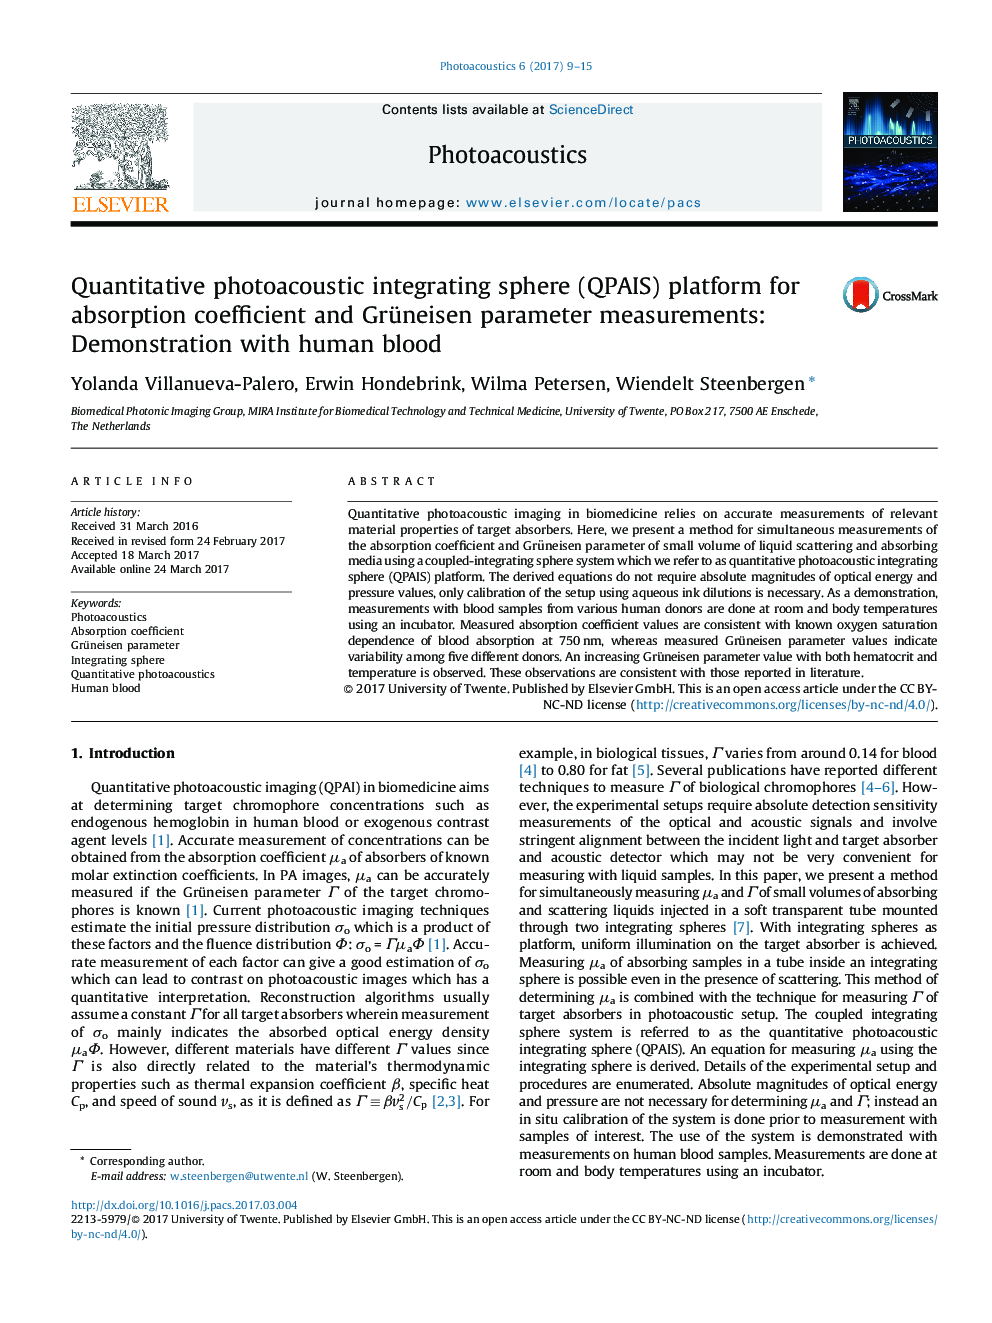 Quantitative photoacoustic integrating sphere (QPAIS) platform for absorption coefficient and Grüneisen parameter measurements: Demonstration with human blood